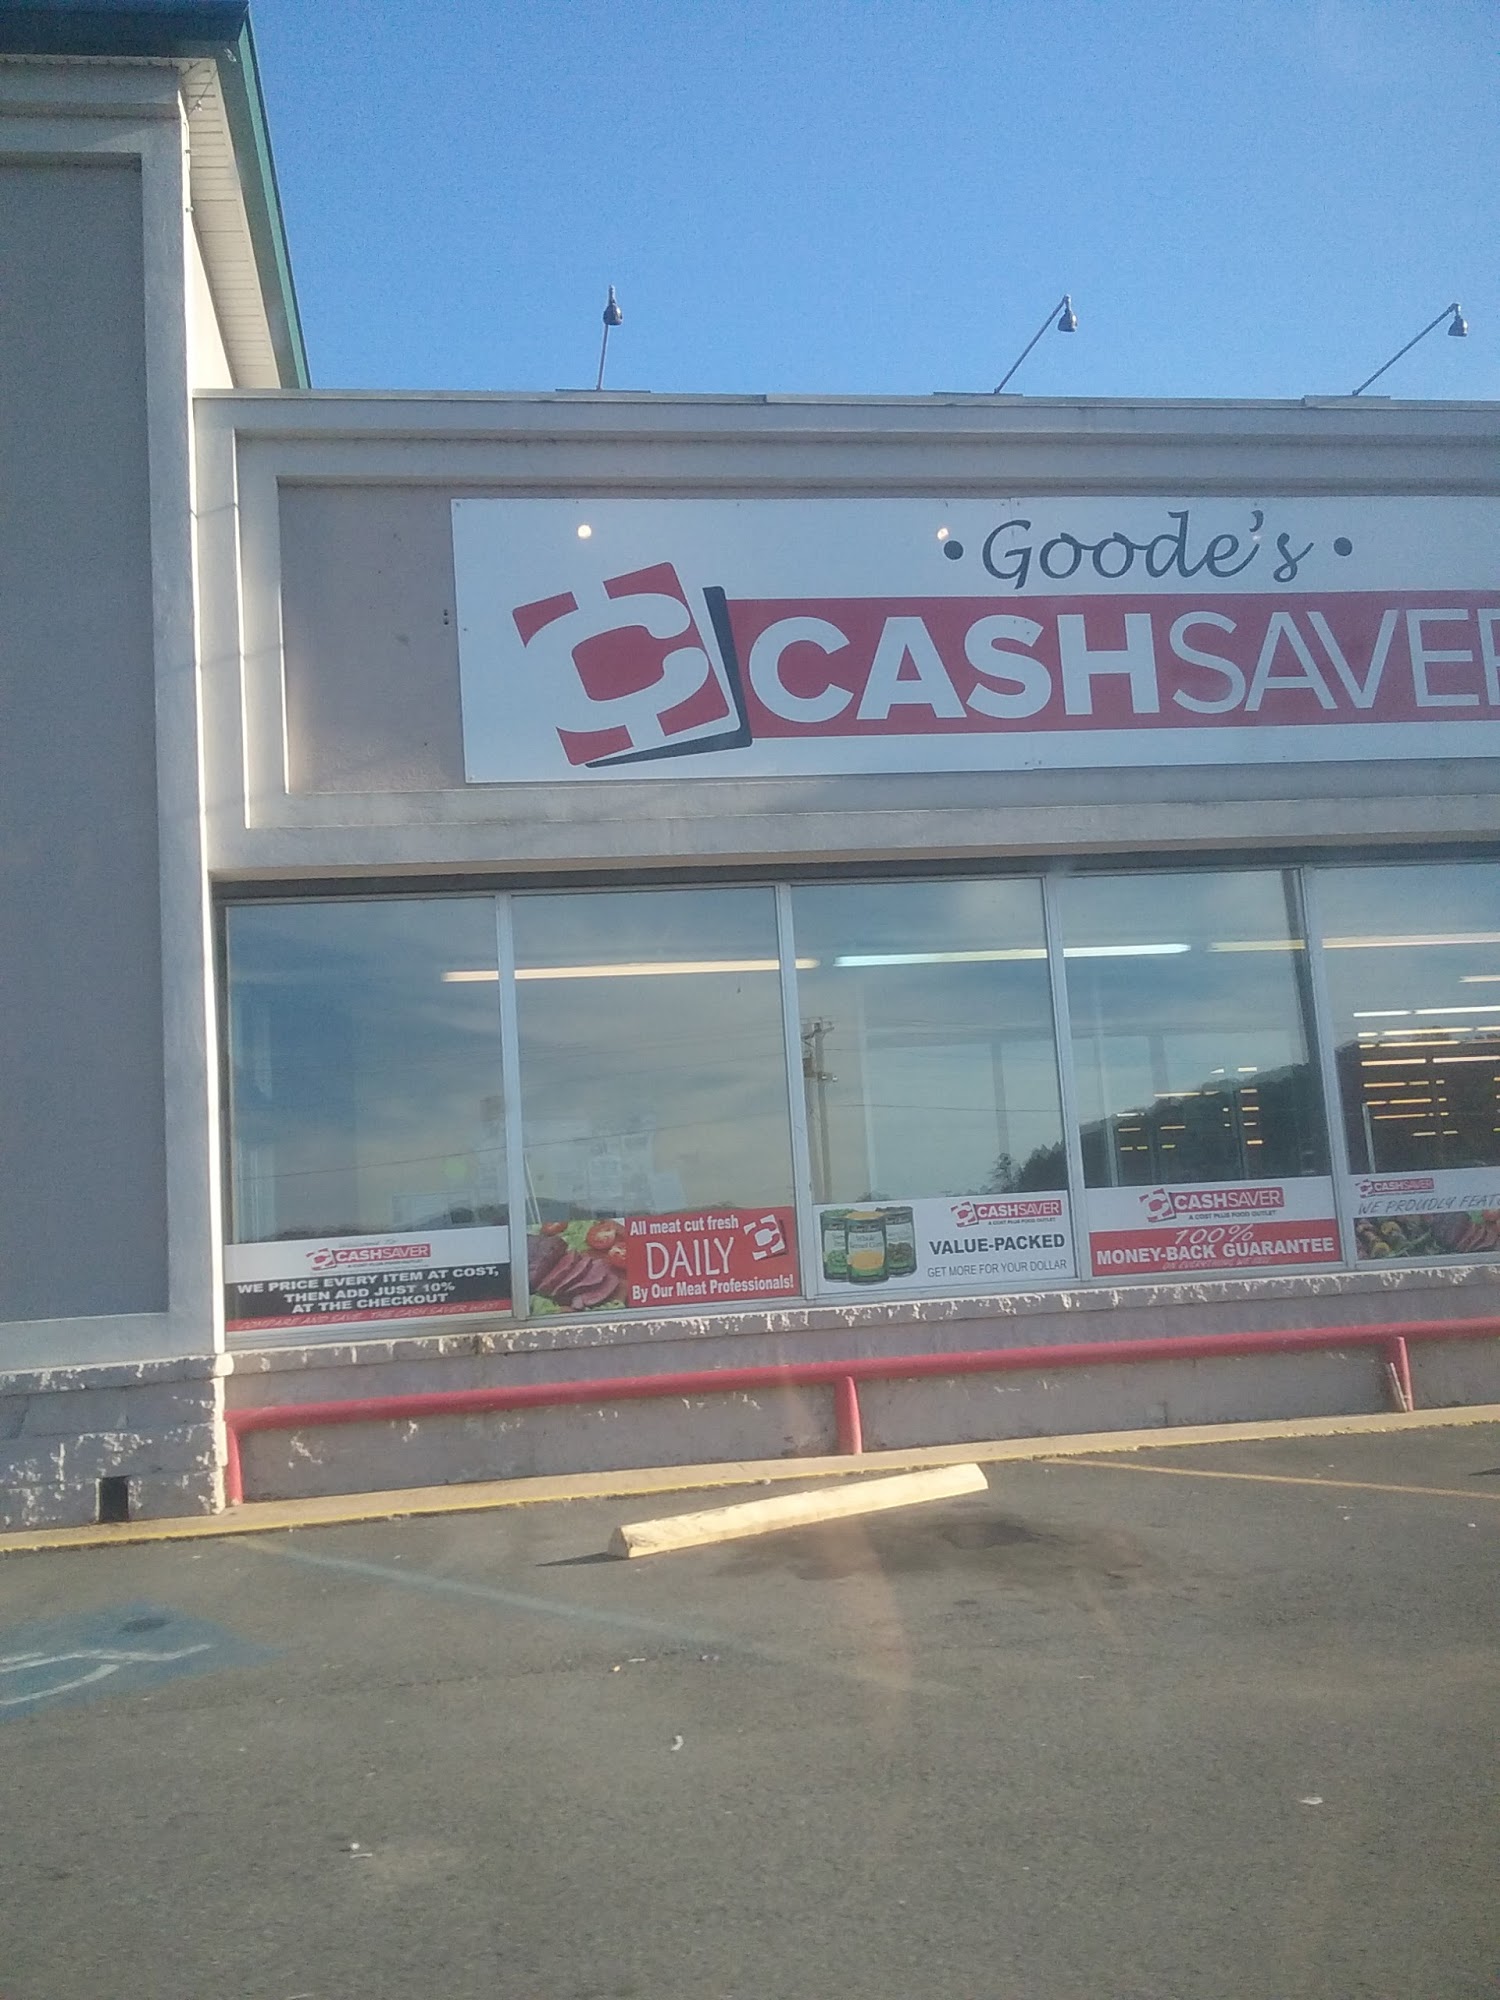 Goode's Cash Saver